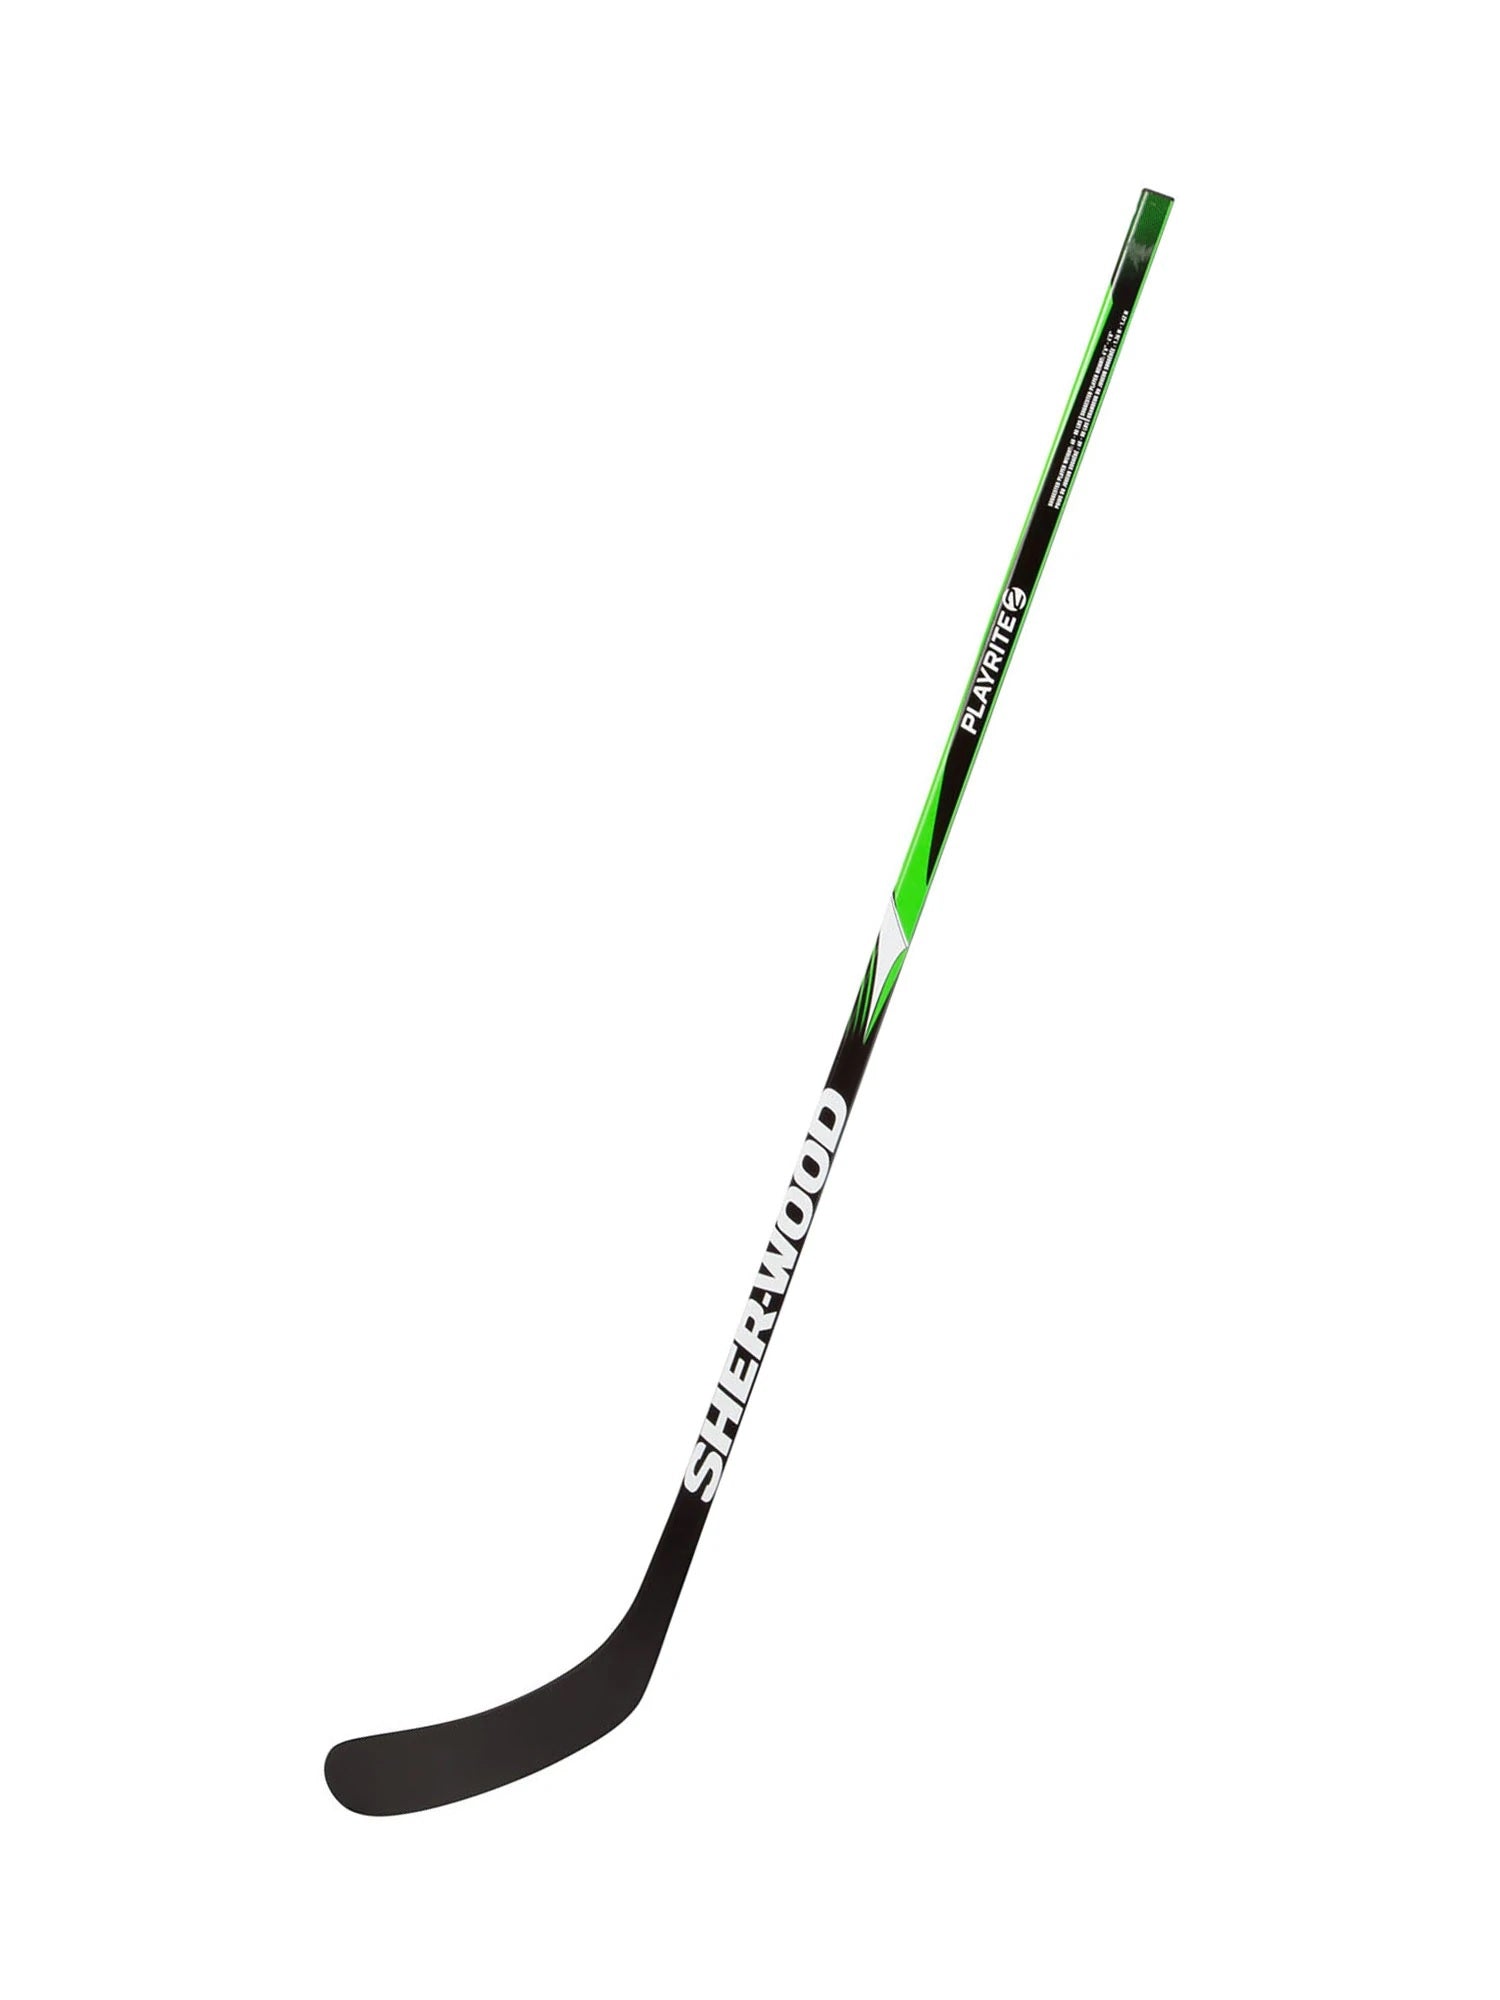 SHERWOOD Ice Hockey Stick Comp. Racket Playrite 2 - 50" - Flex 35 Left